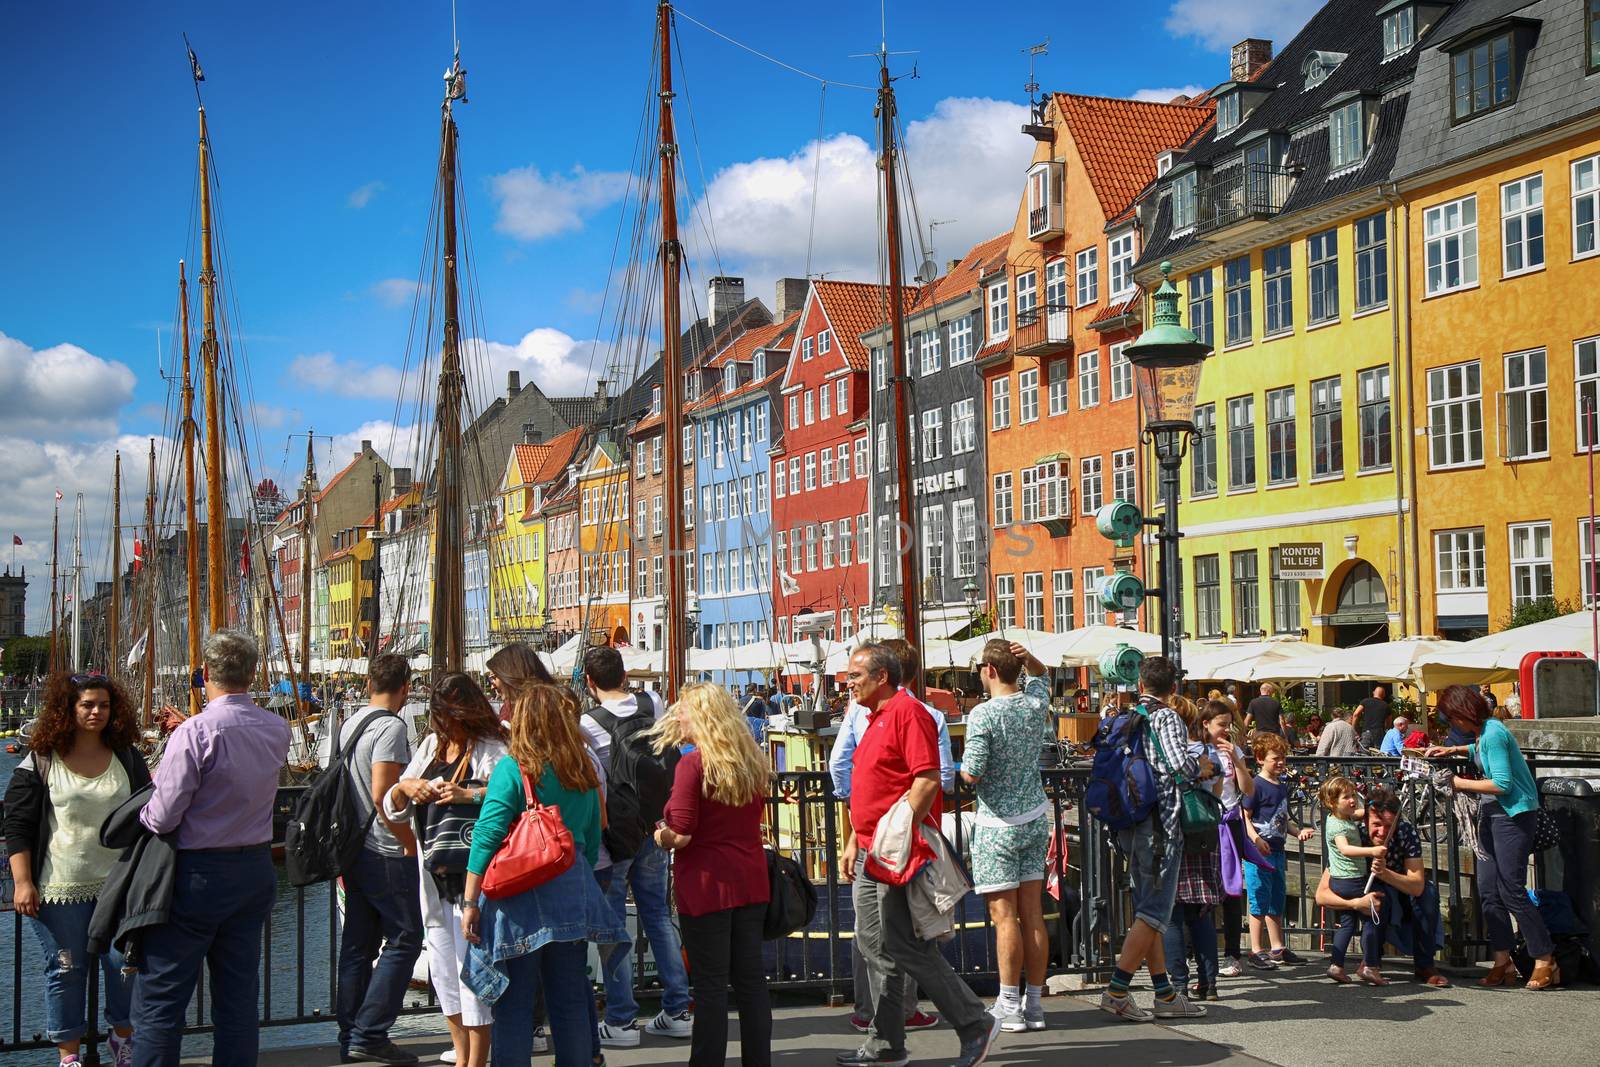 Copenhagen, Denmark – August  15, 2016: Boats in the docks Nyhavn, people, restaurants and colorful architecture. Nyhavn a 17th century harbour in Copenhagen, Denmark